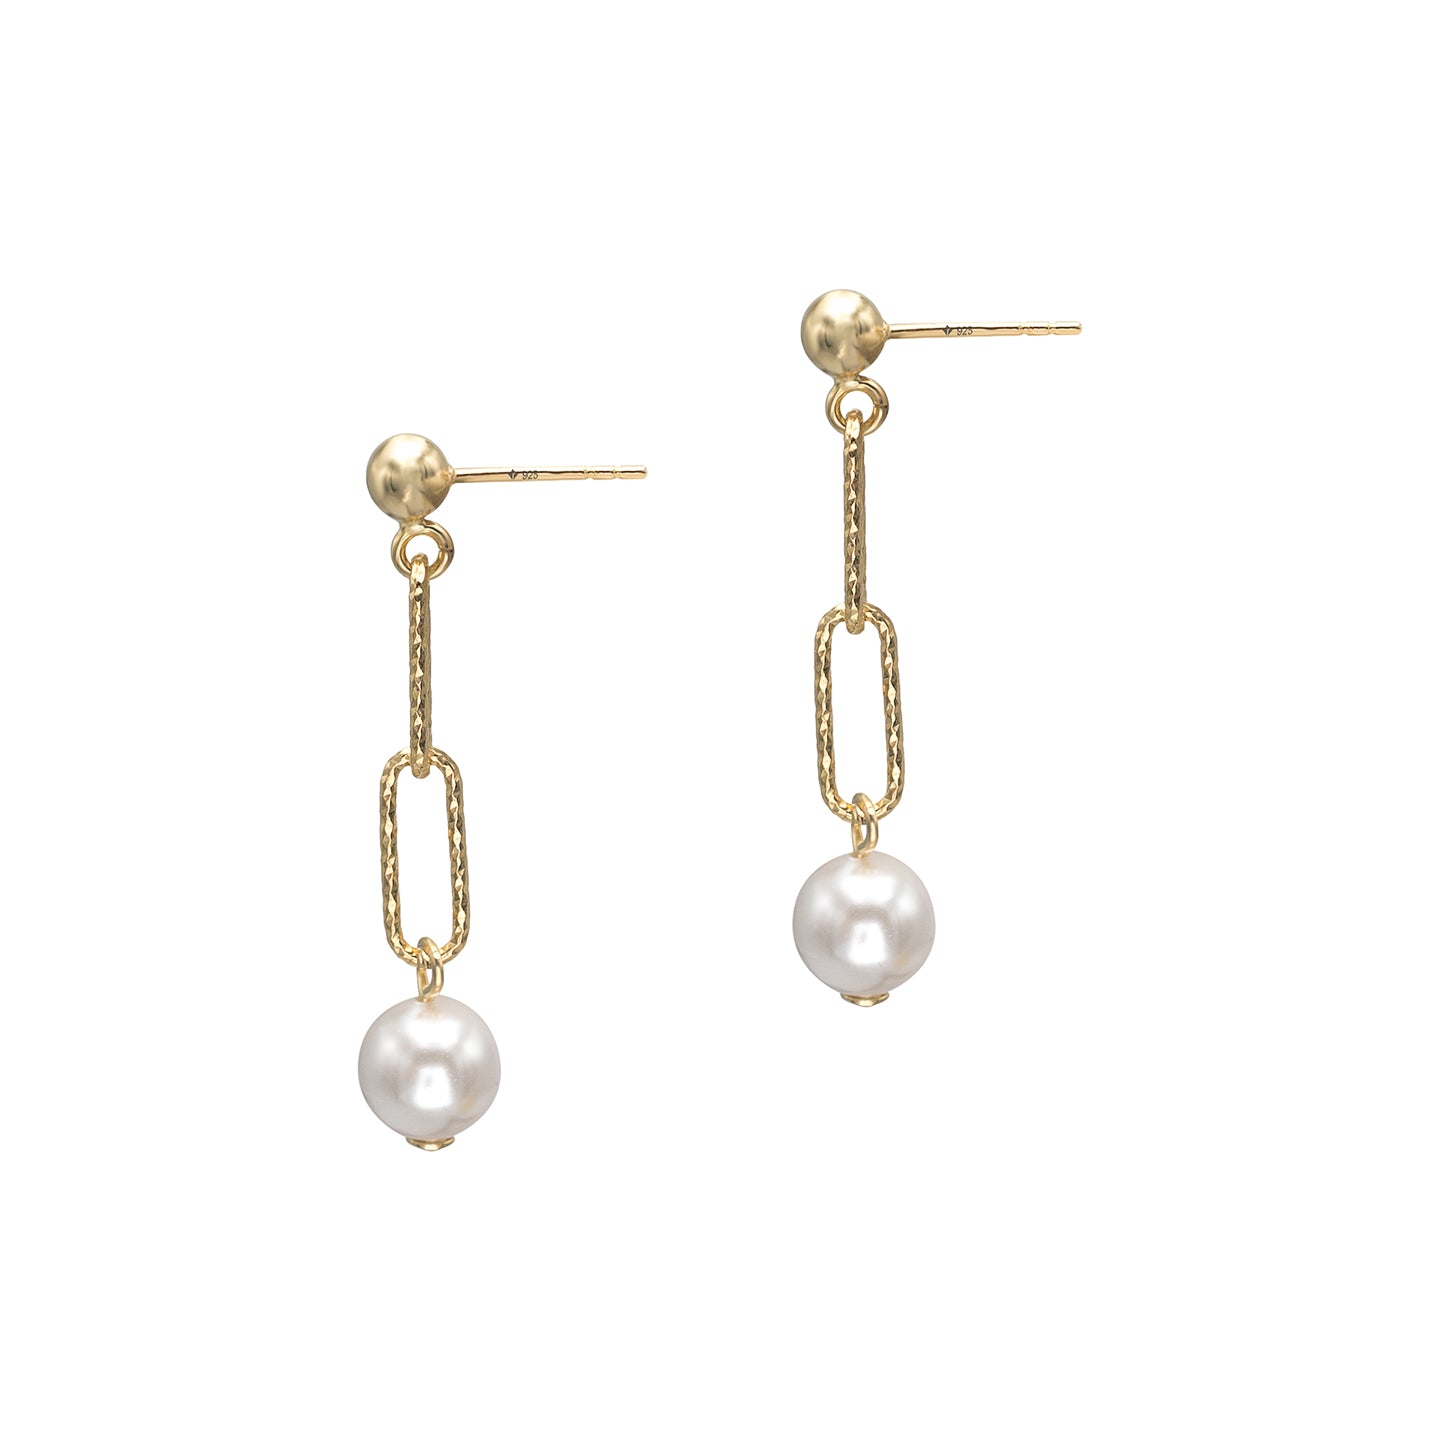 Cercei argint cu perle Masiv Hardwear Pearl - placati aur galben 18K